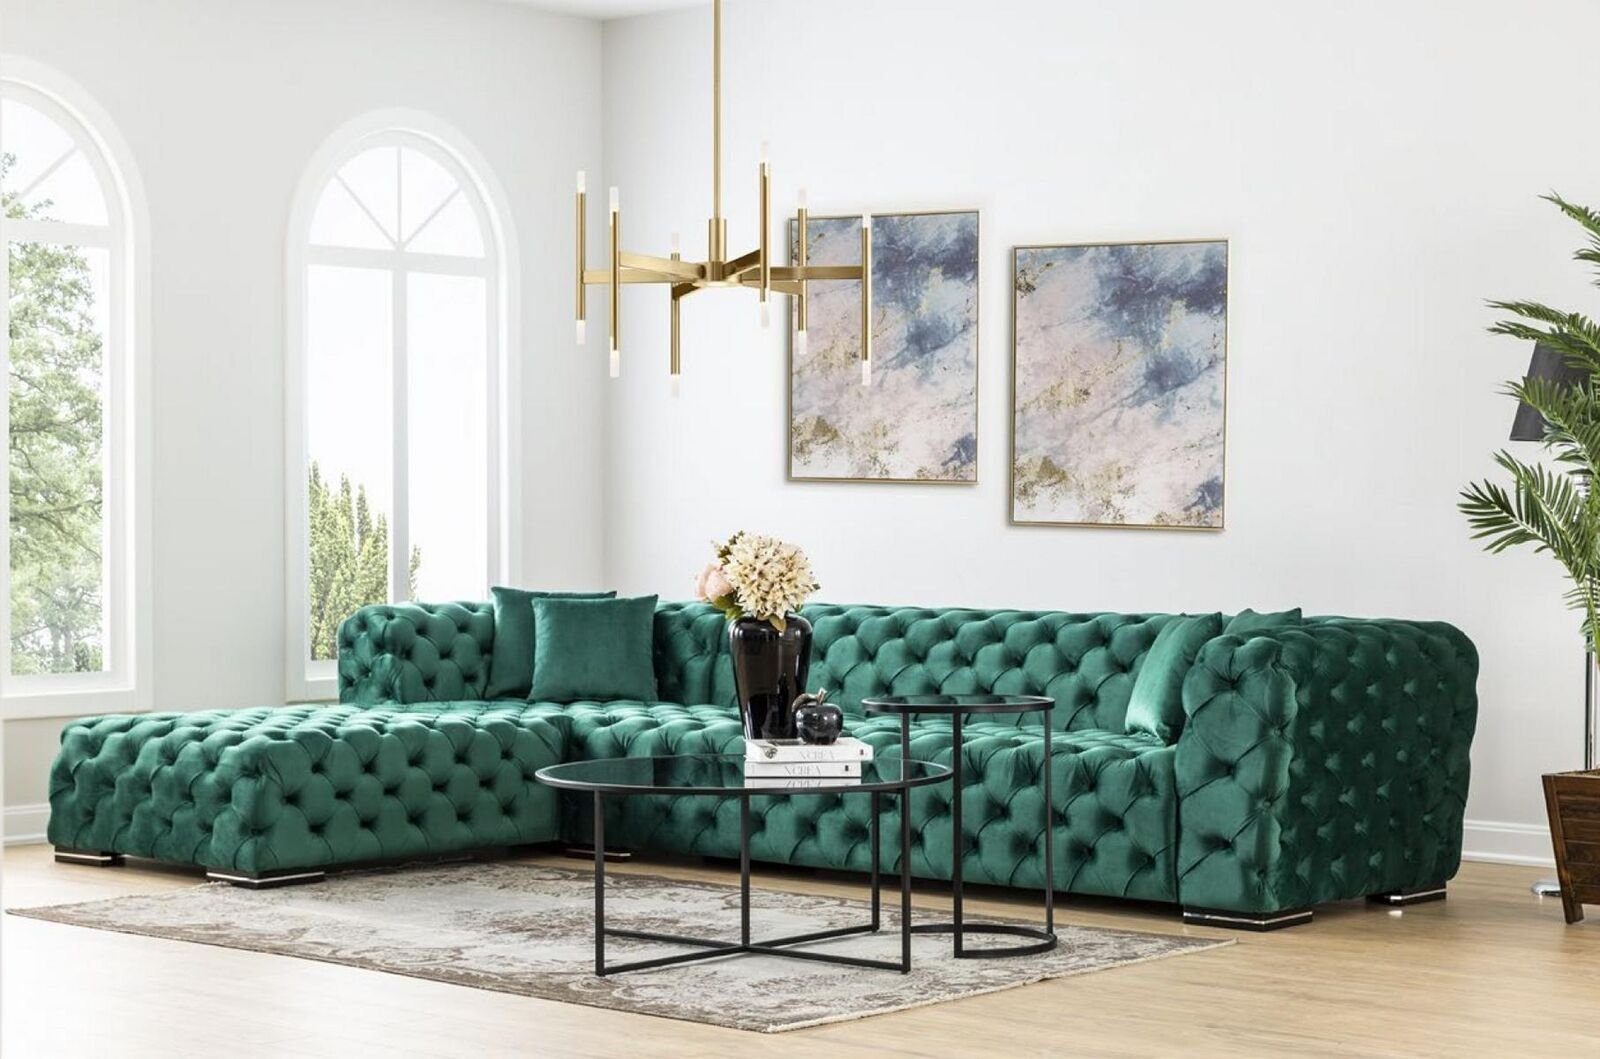 JVmoebel Ecksofa Ecksofa L Form Sofa Couch Design Polster Textil Neu Eck  Garnitur Grün